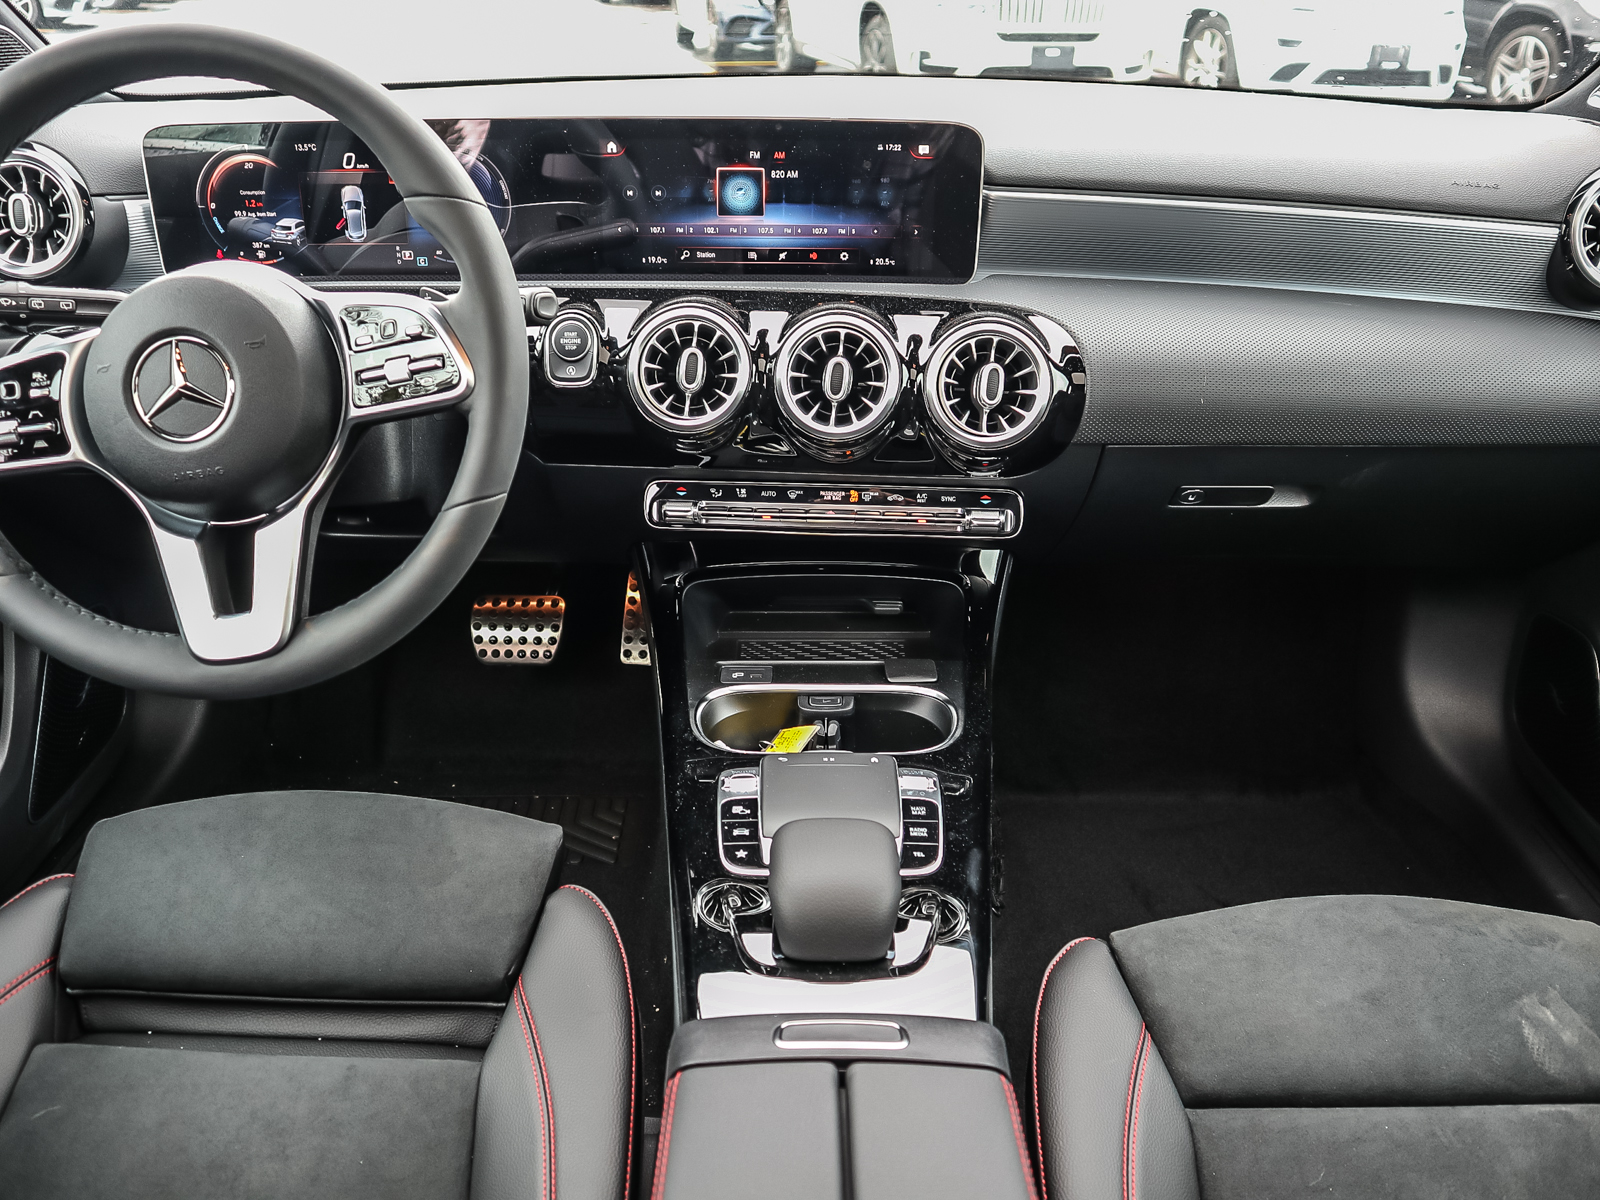 New 2019 Mercedes-Benz A250 4MATIC Hatch 5-Door Hatchback 